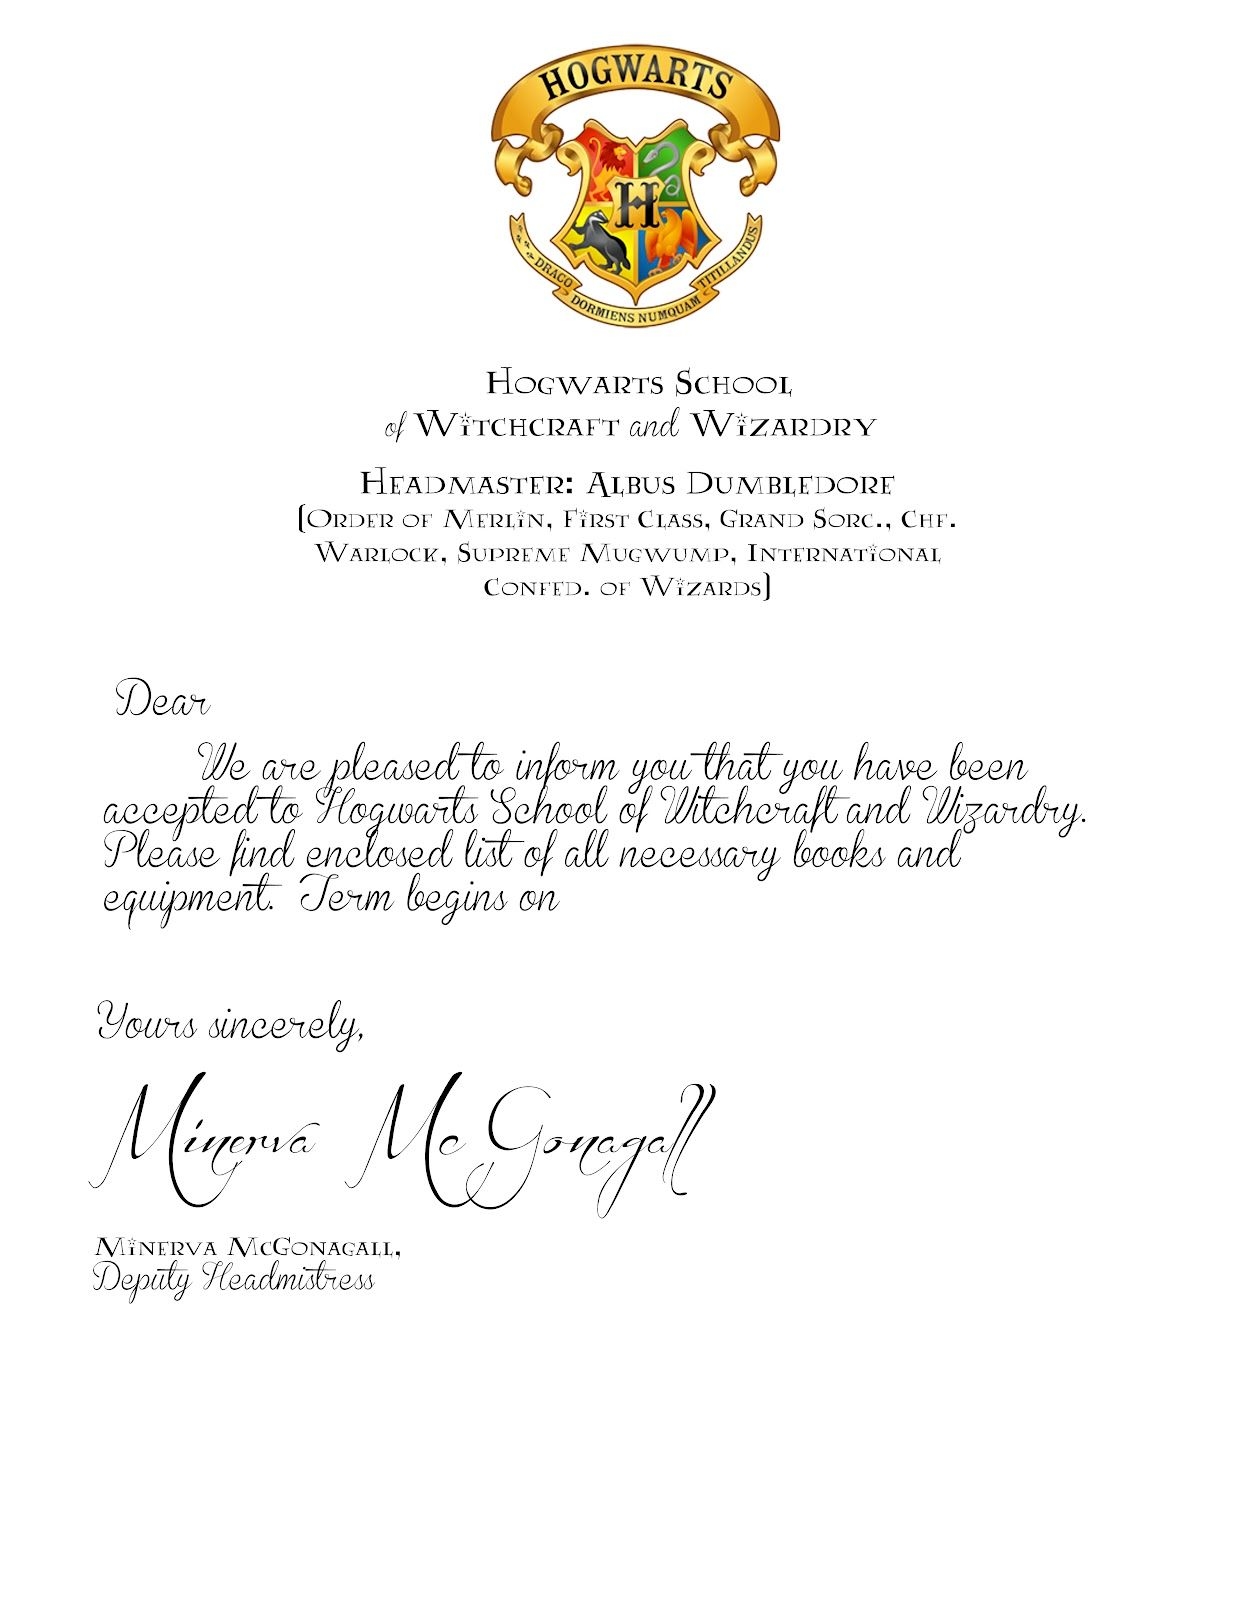 Hogwarts Harry Potter Invitations Harry Potter Letter Harry Potter Acceptance Letter